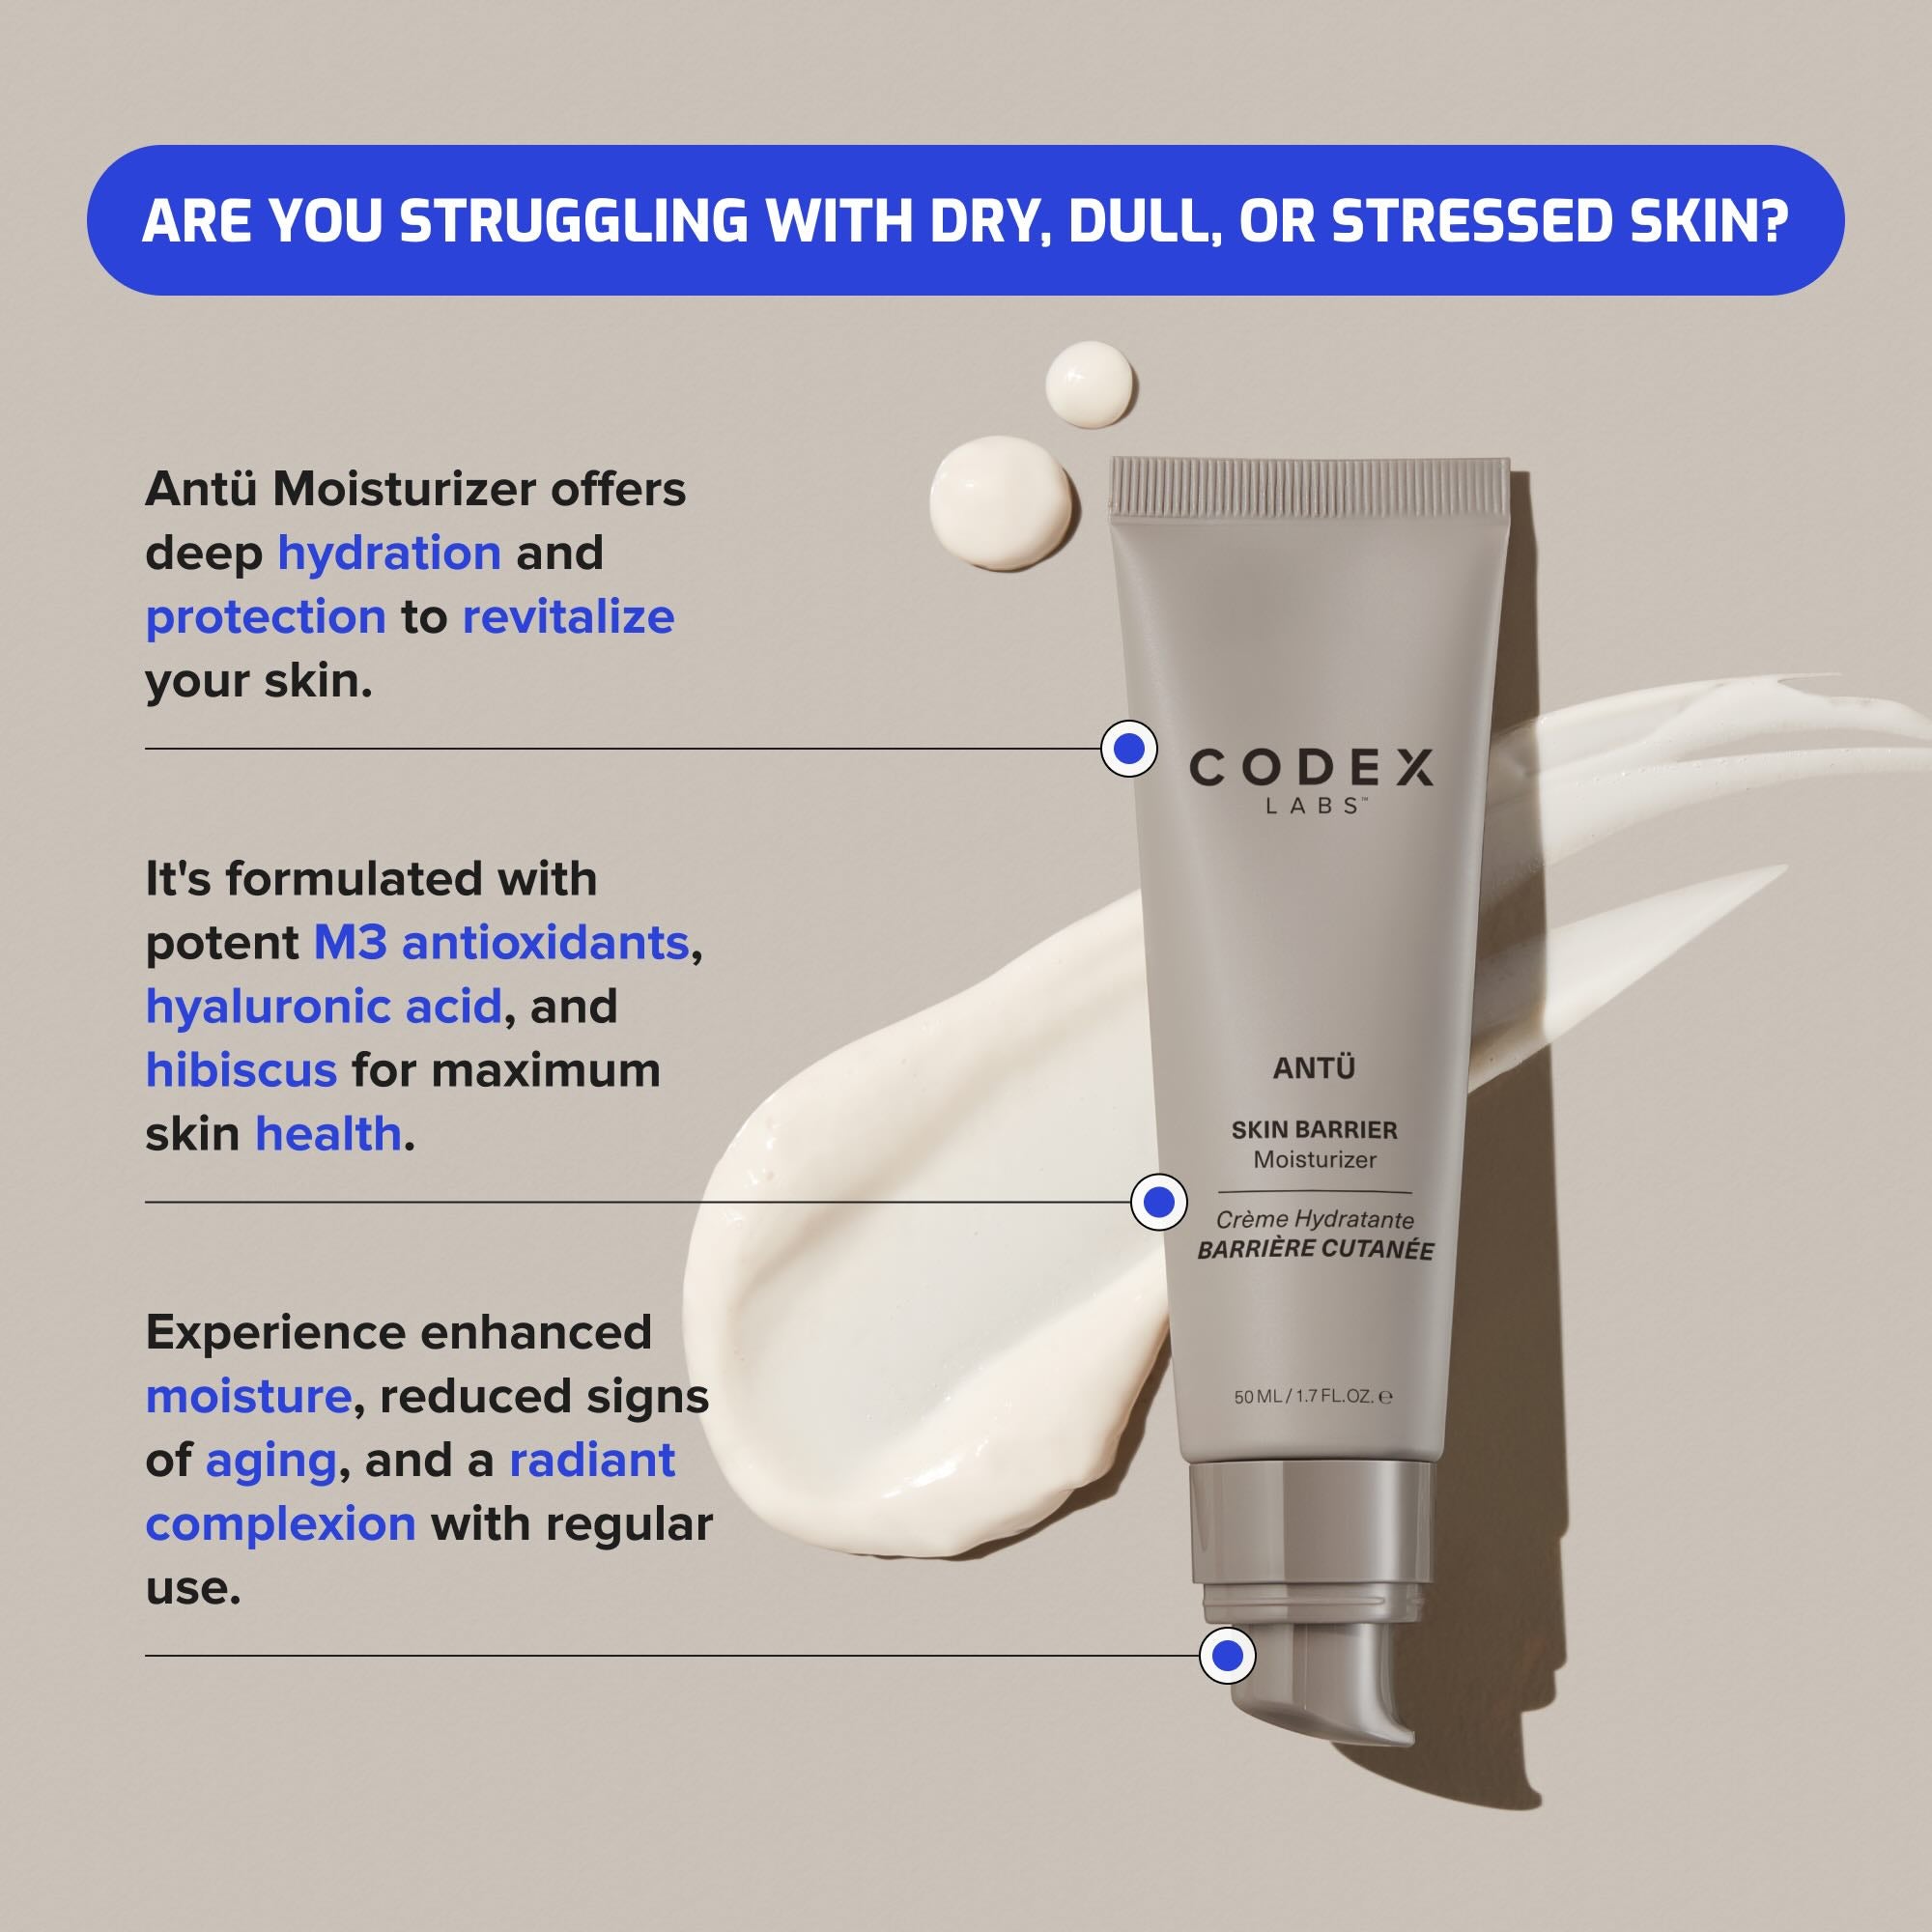 Antü Skin Barrier Moisturizer product benefits infographic.